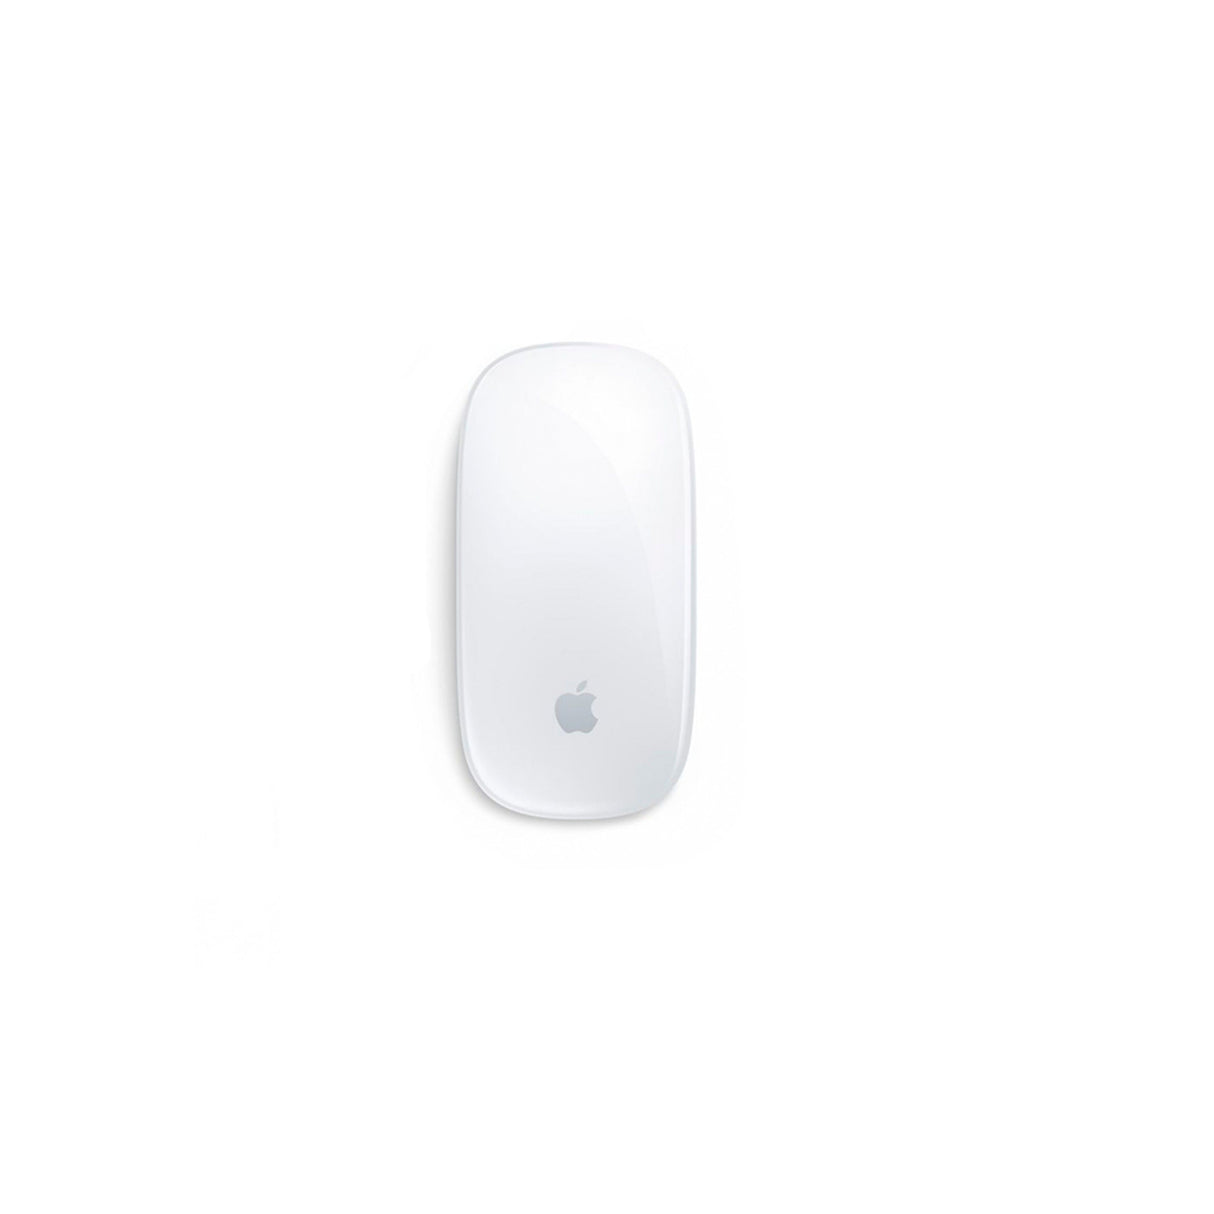 Teclado Apple A2449 Magic Keyboard + Mouse Open Box